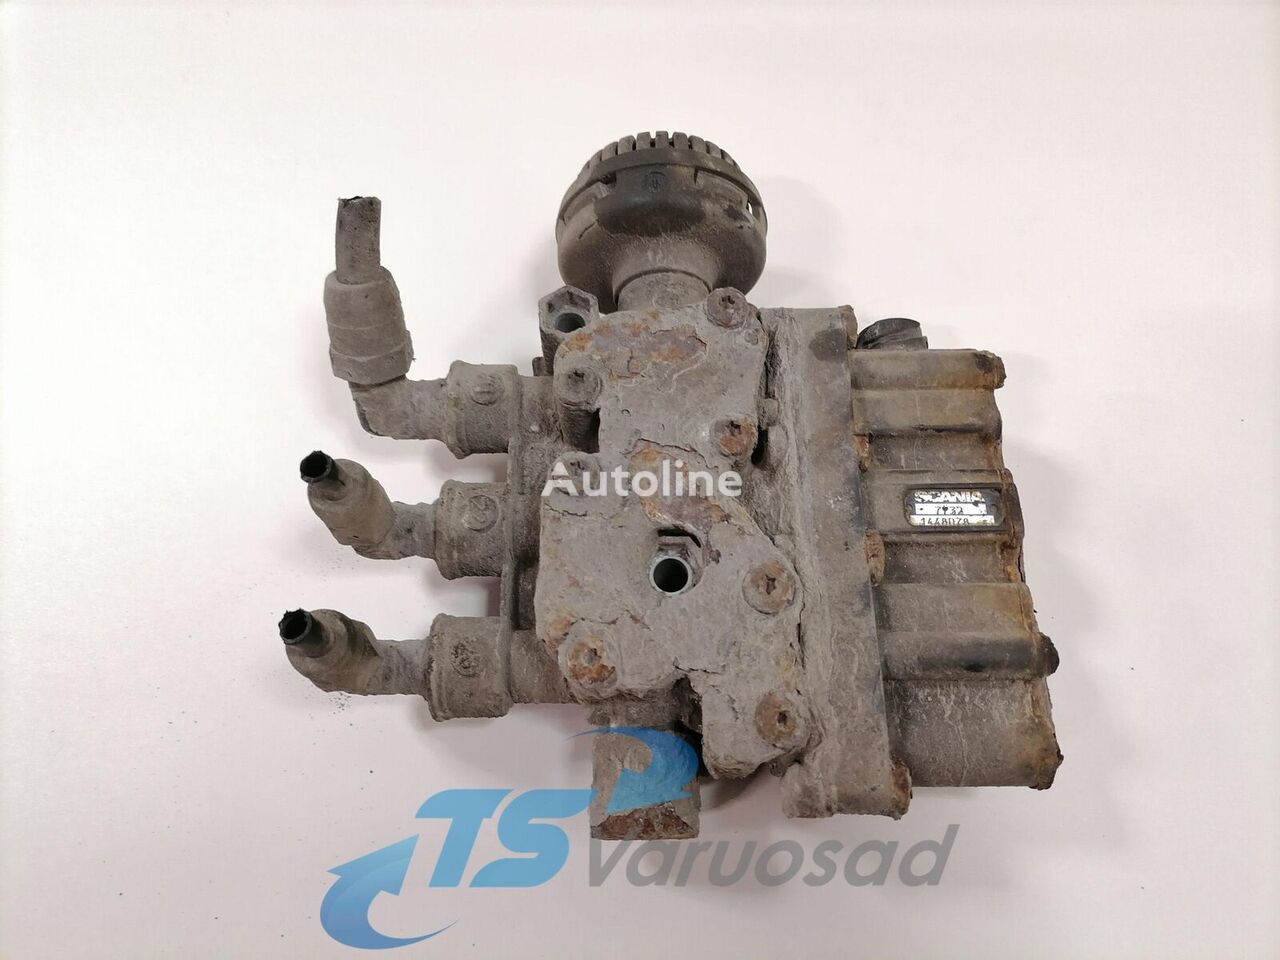 Scania Air suspension control valve, ECAS 2084509 pneumatic valve for Scania R420 truck tractor